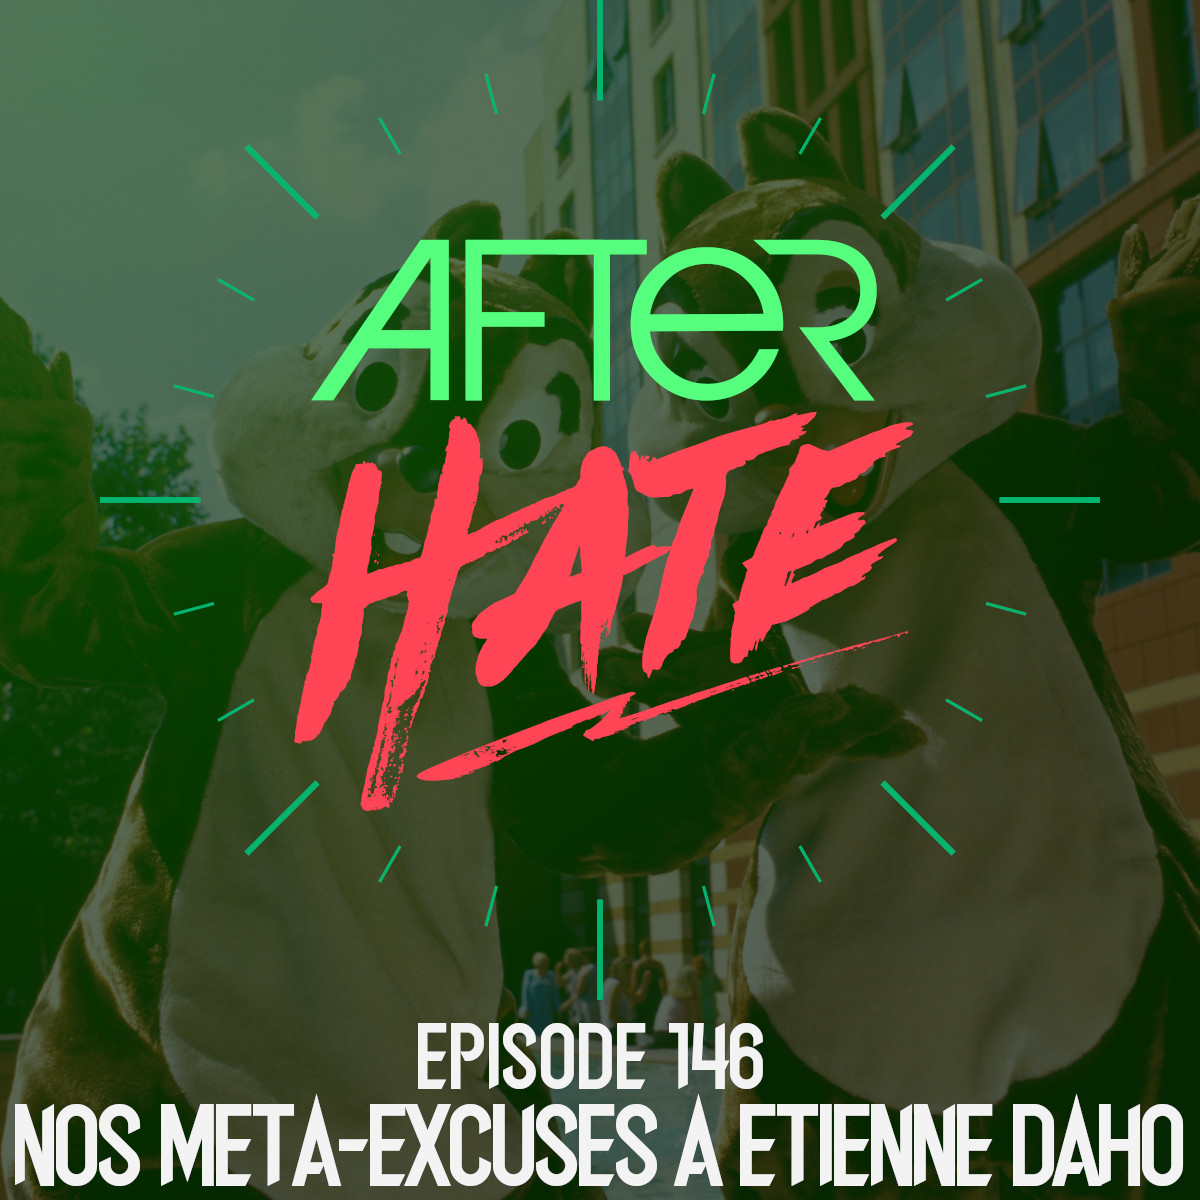 Episode 146 : Nos Meta-Excuses à Étienne Daho